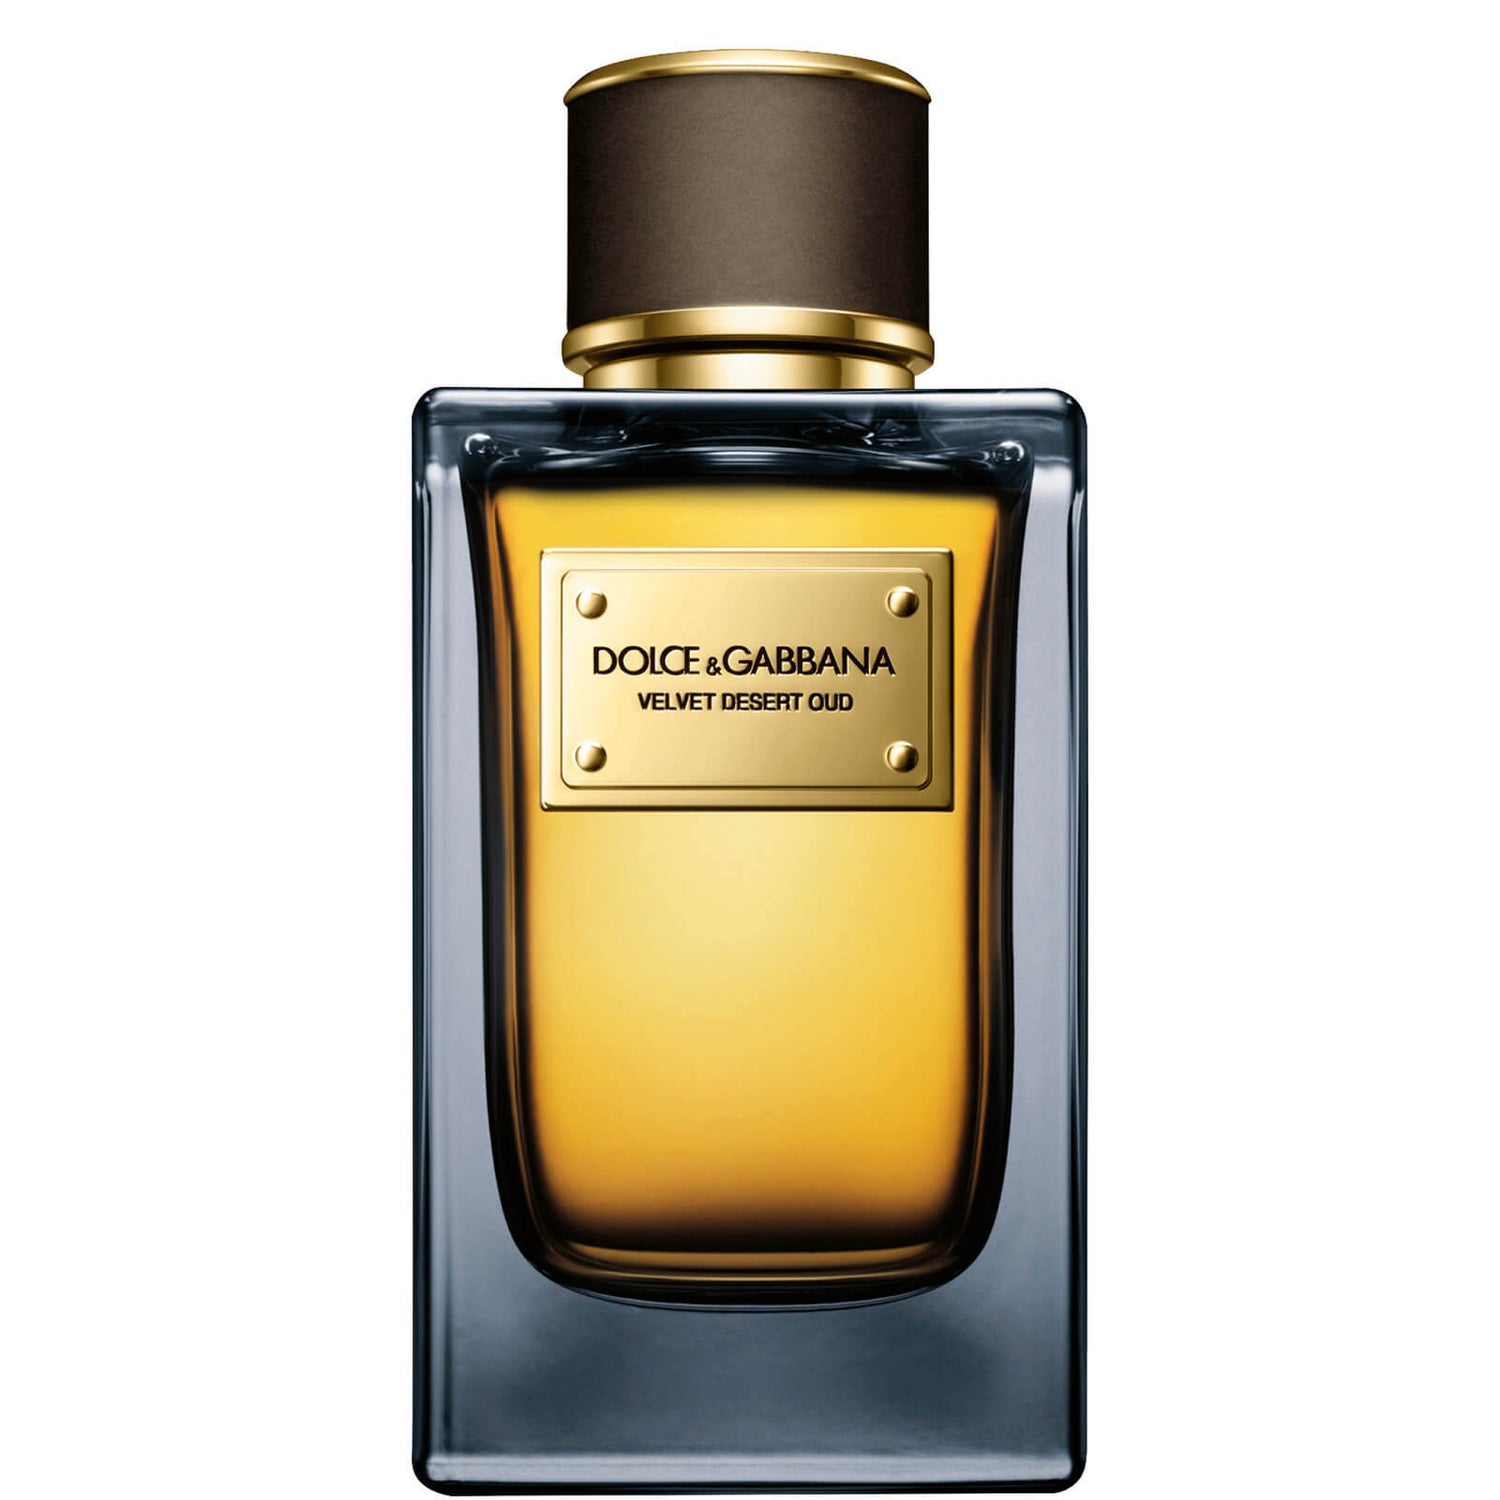 Dolce&Gabbana Velvet Desert Oud Eau de Parfum - 150ml